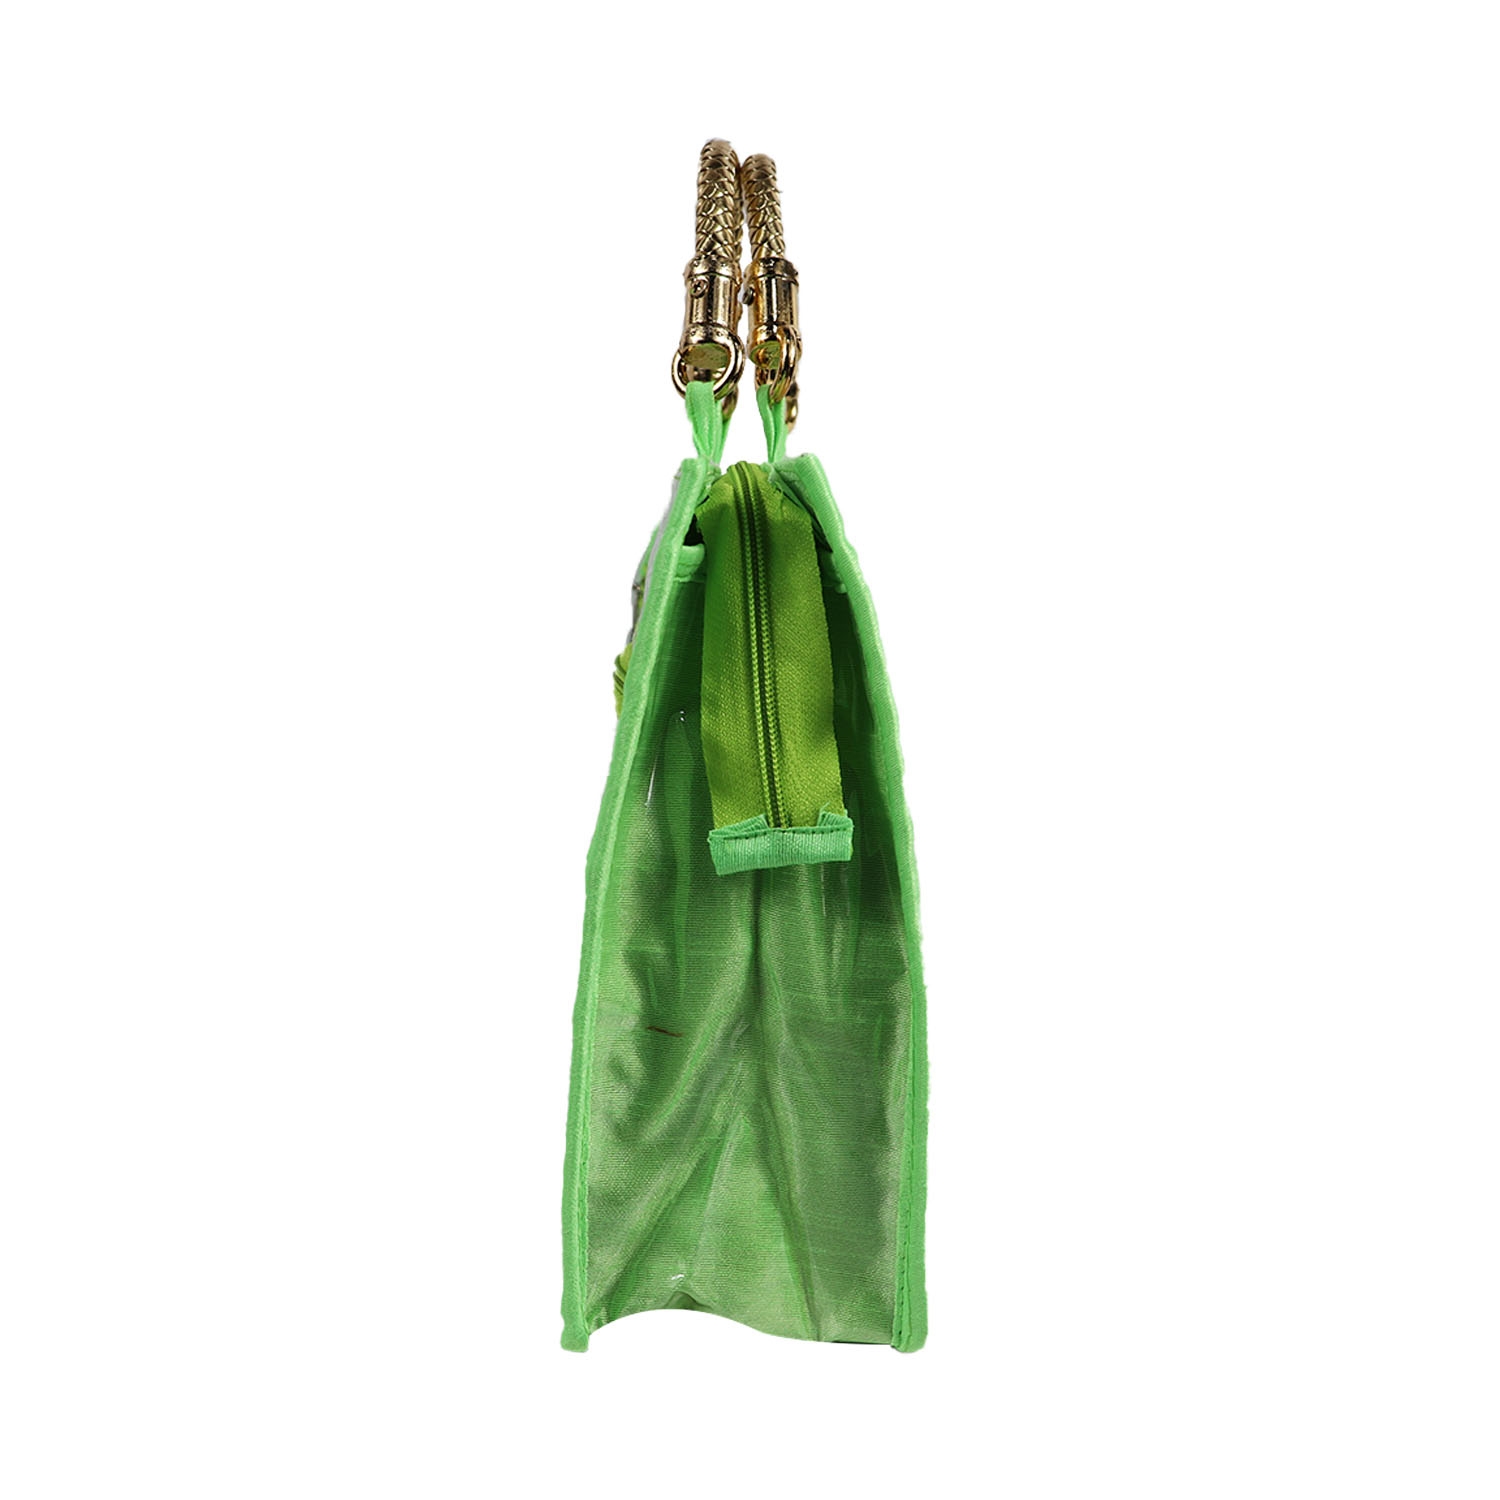 Green-Coloured Women's Solid Shopper Bag
